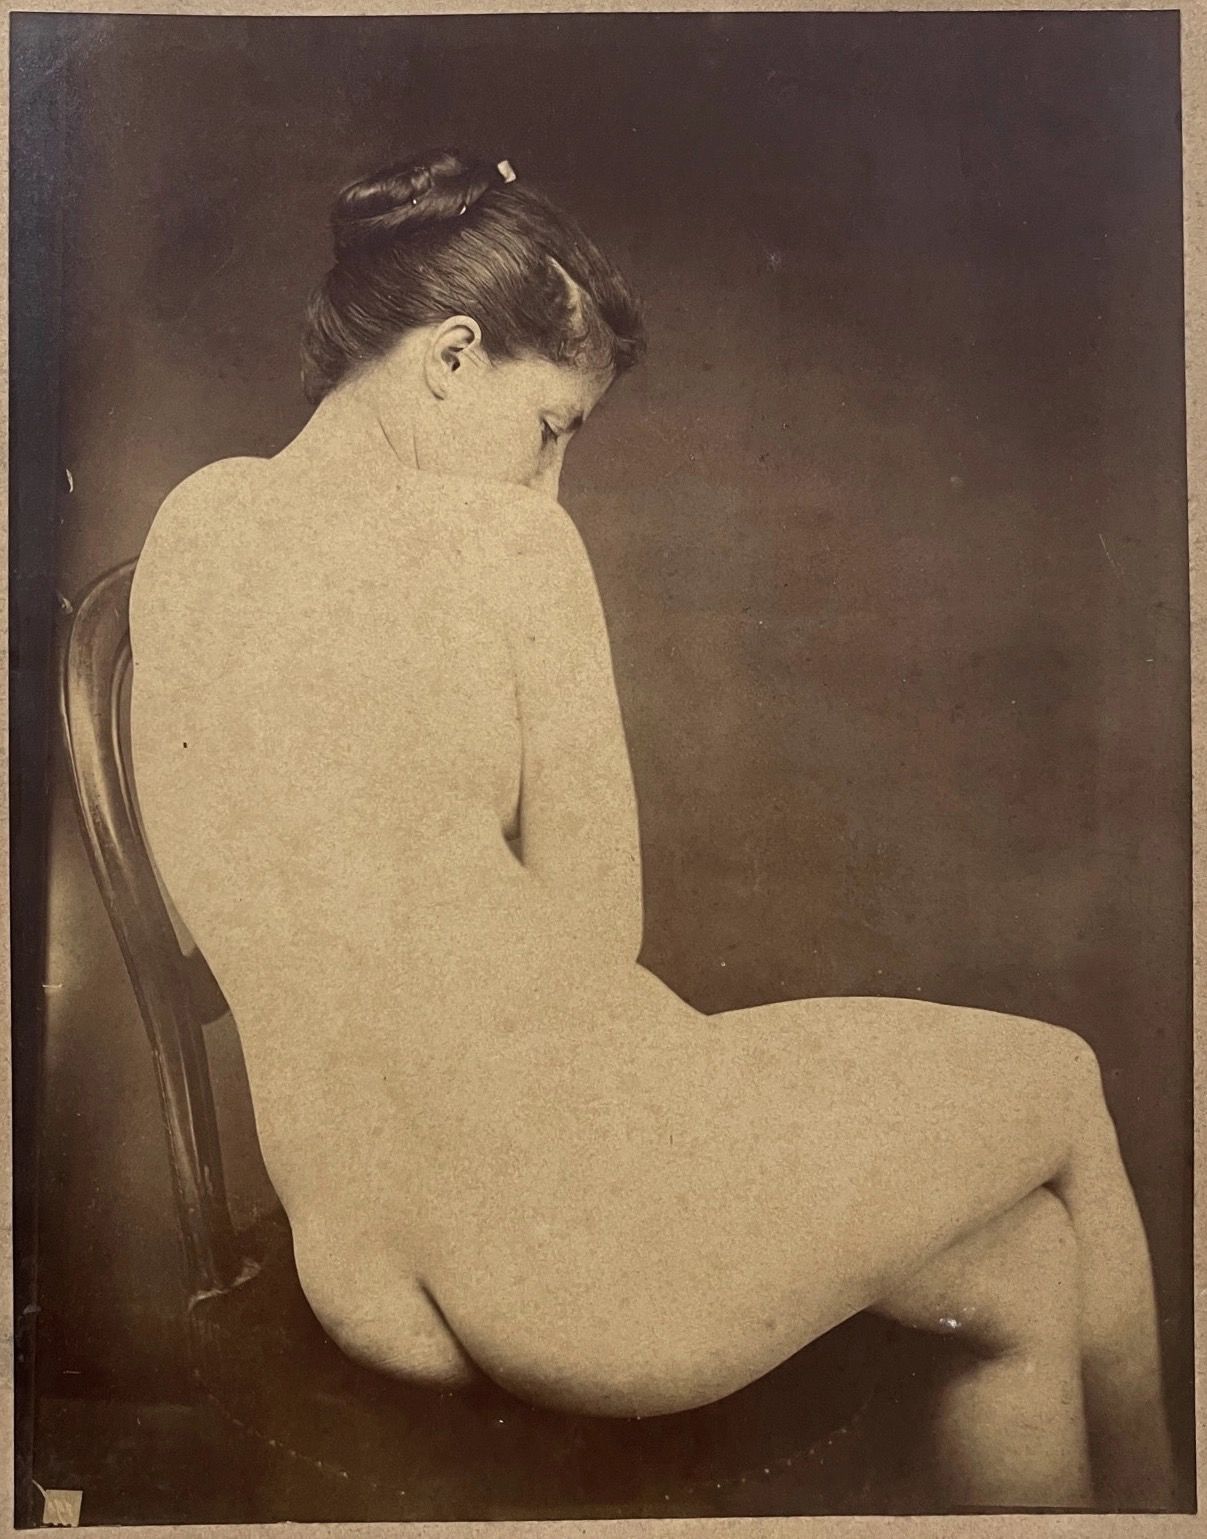 Parisian Studio 
裸体，巴黎，约1895年 册页印刷品，234x182毫米，底片上有难以辨认的小纸条，表面有一些斑点